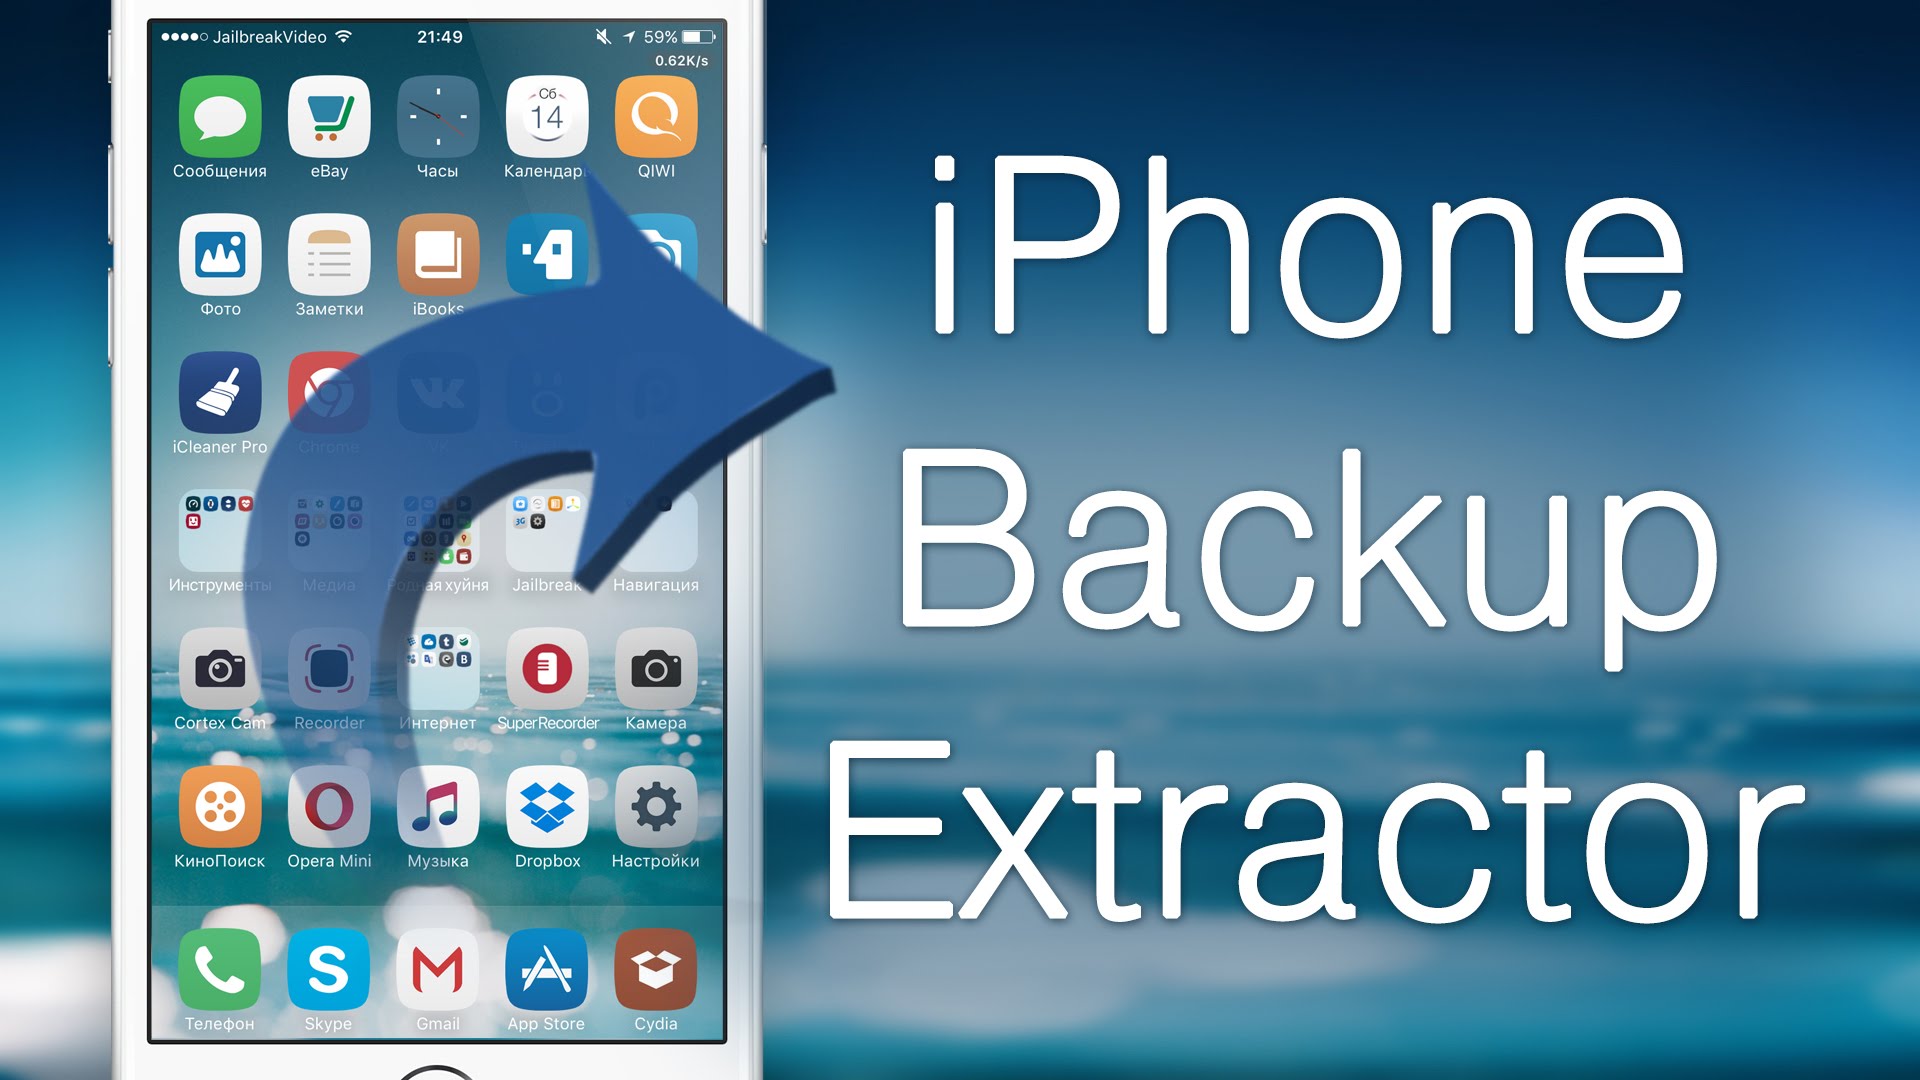 iphone backup extractor app